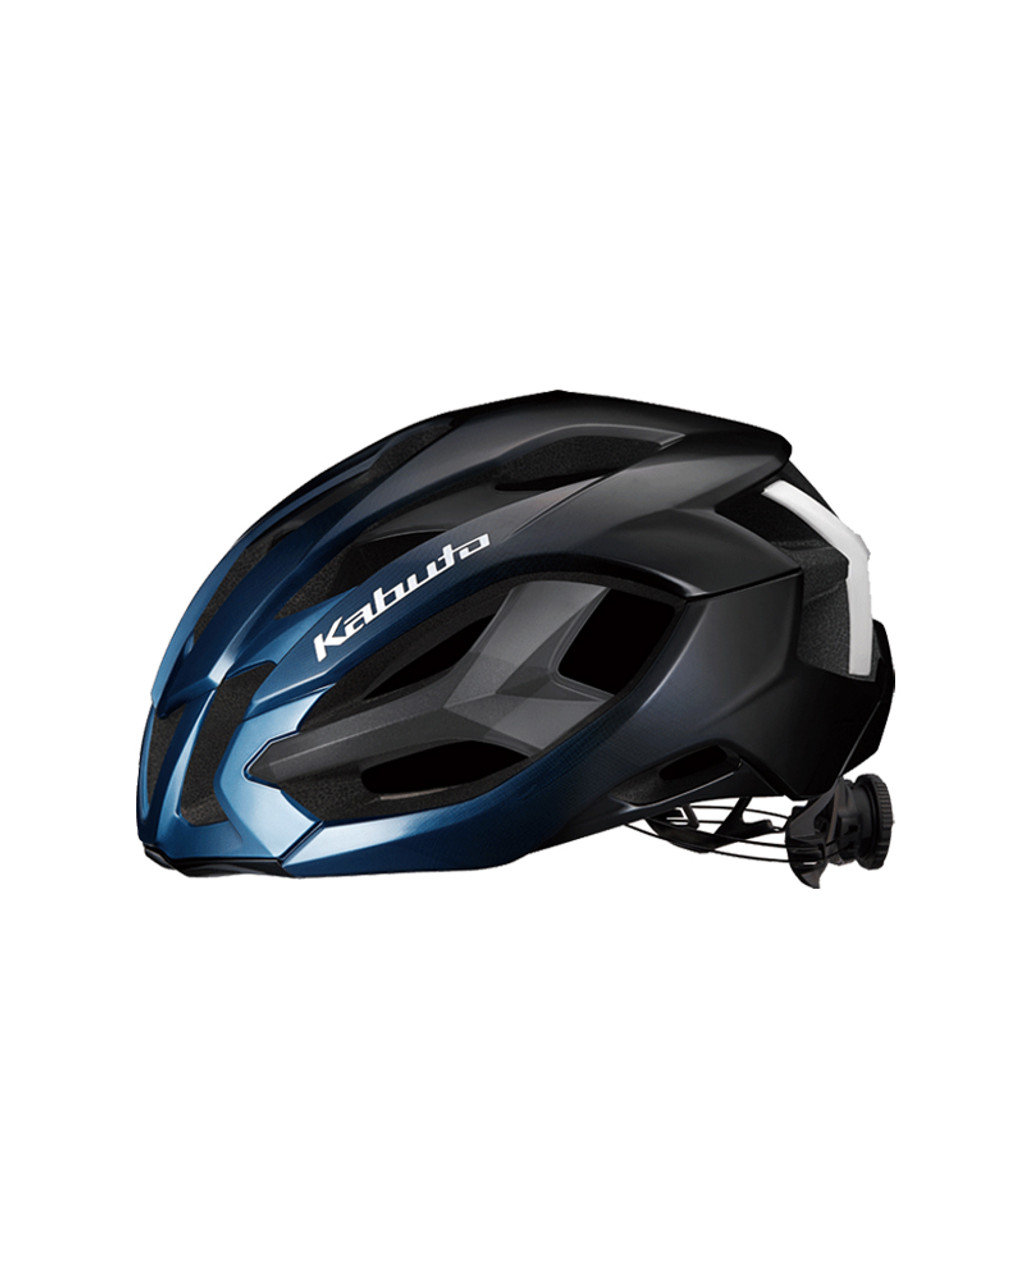 kabuto cycling helmet